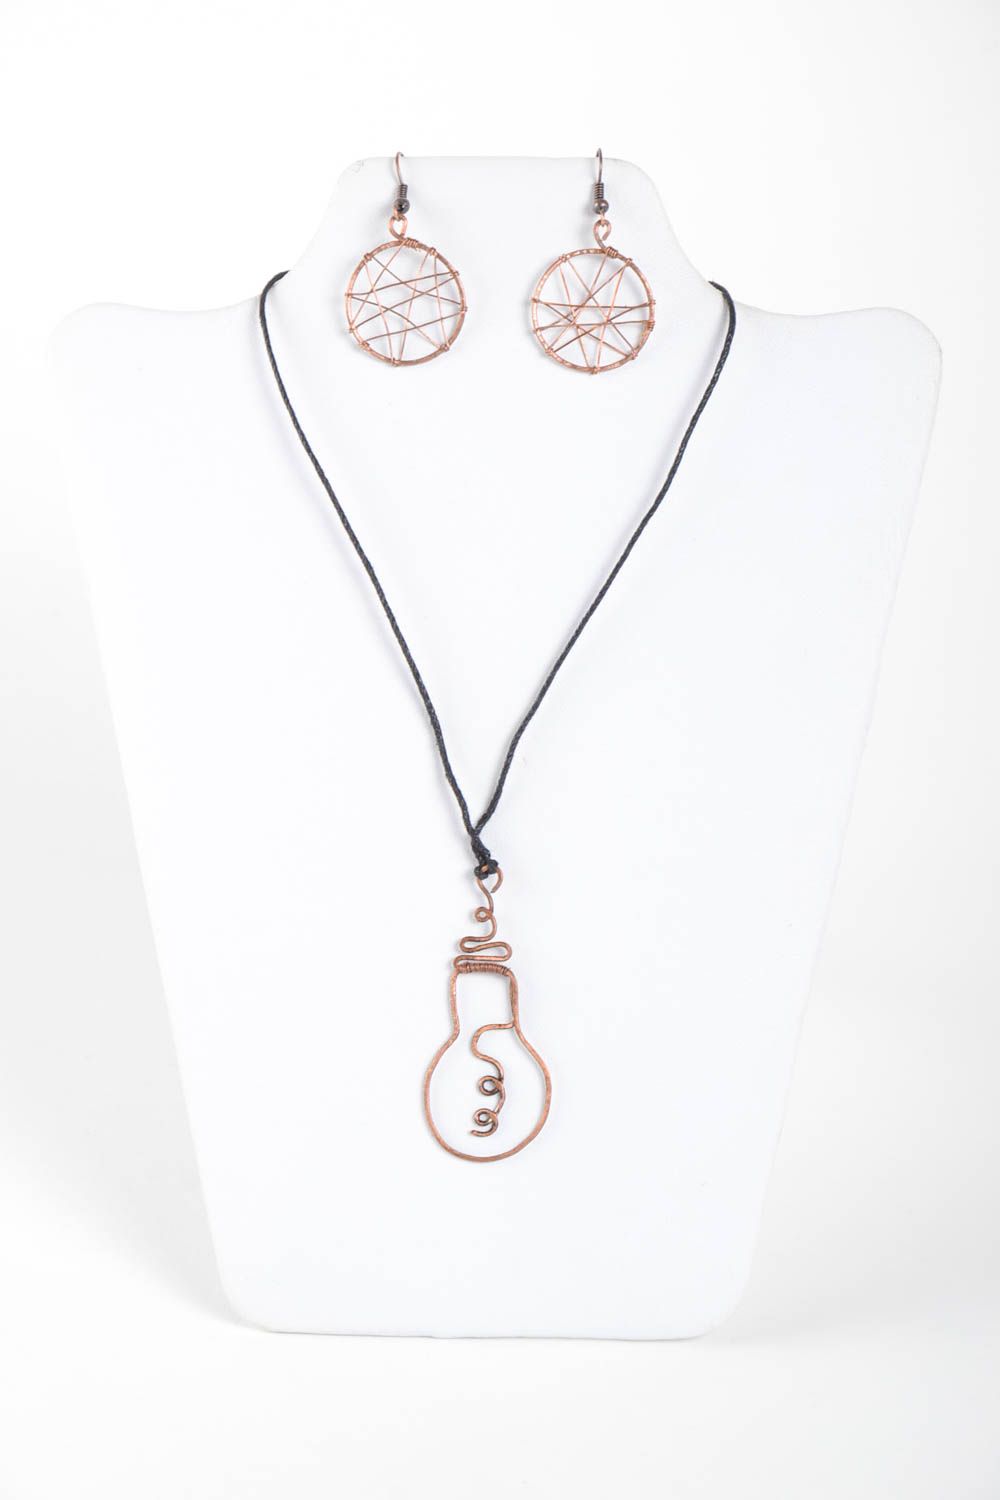 Handmade copper jewelry wire wrap pendant copper earrings copper jewelry photo 2